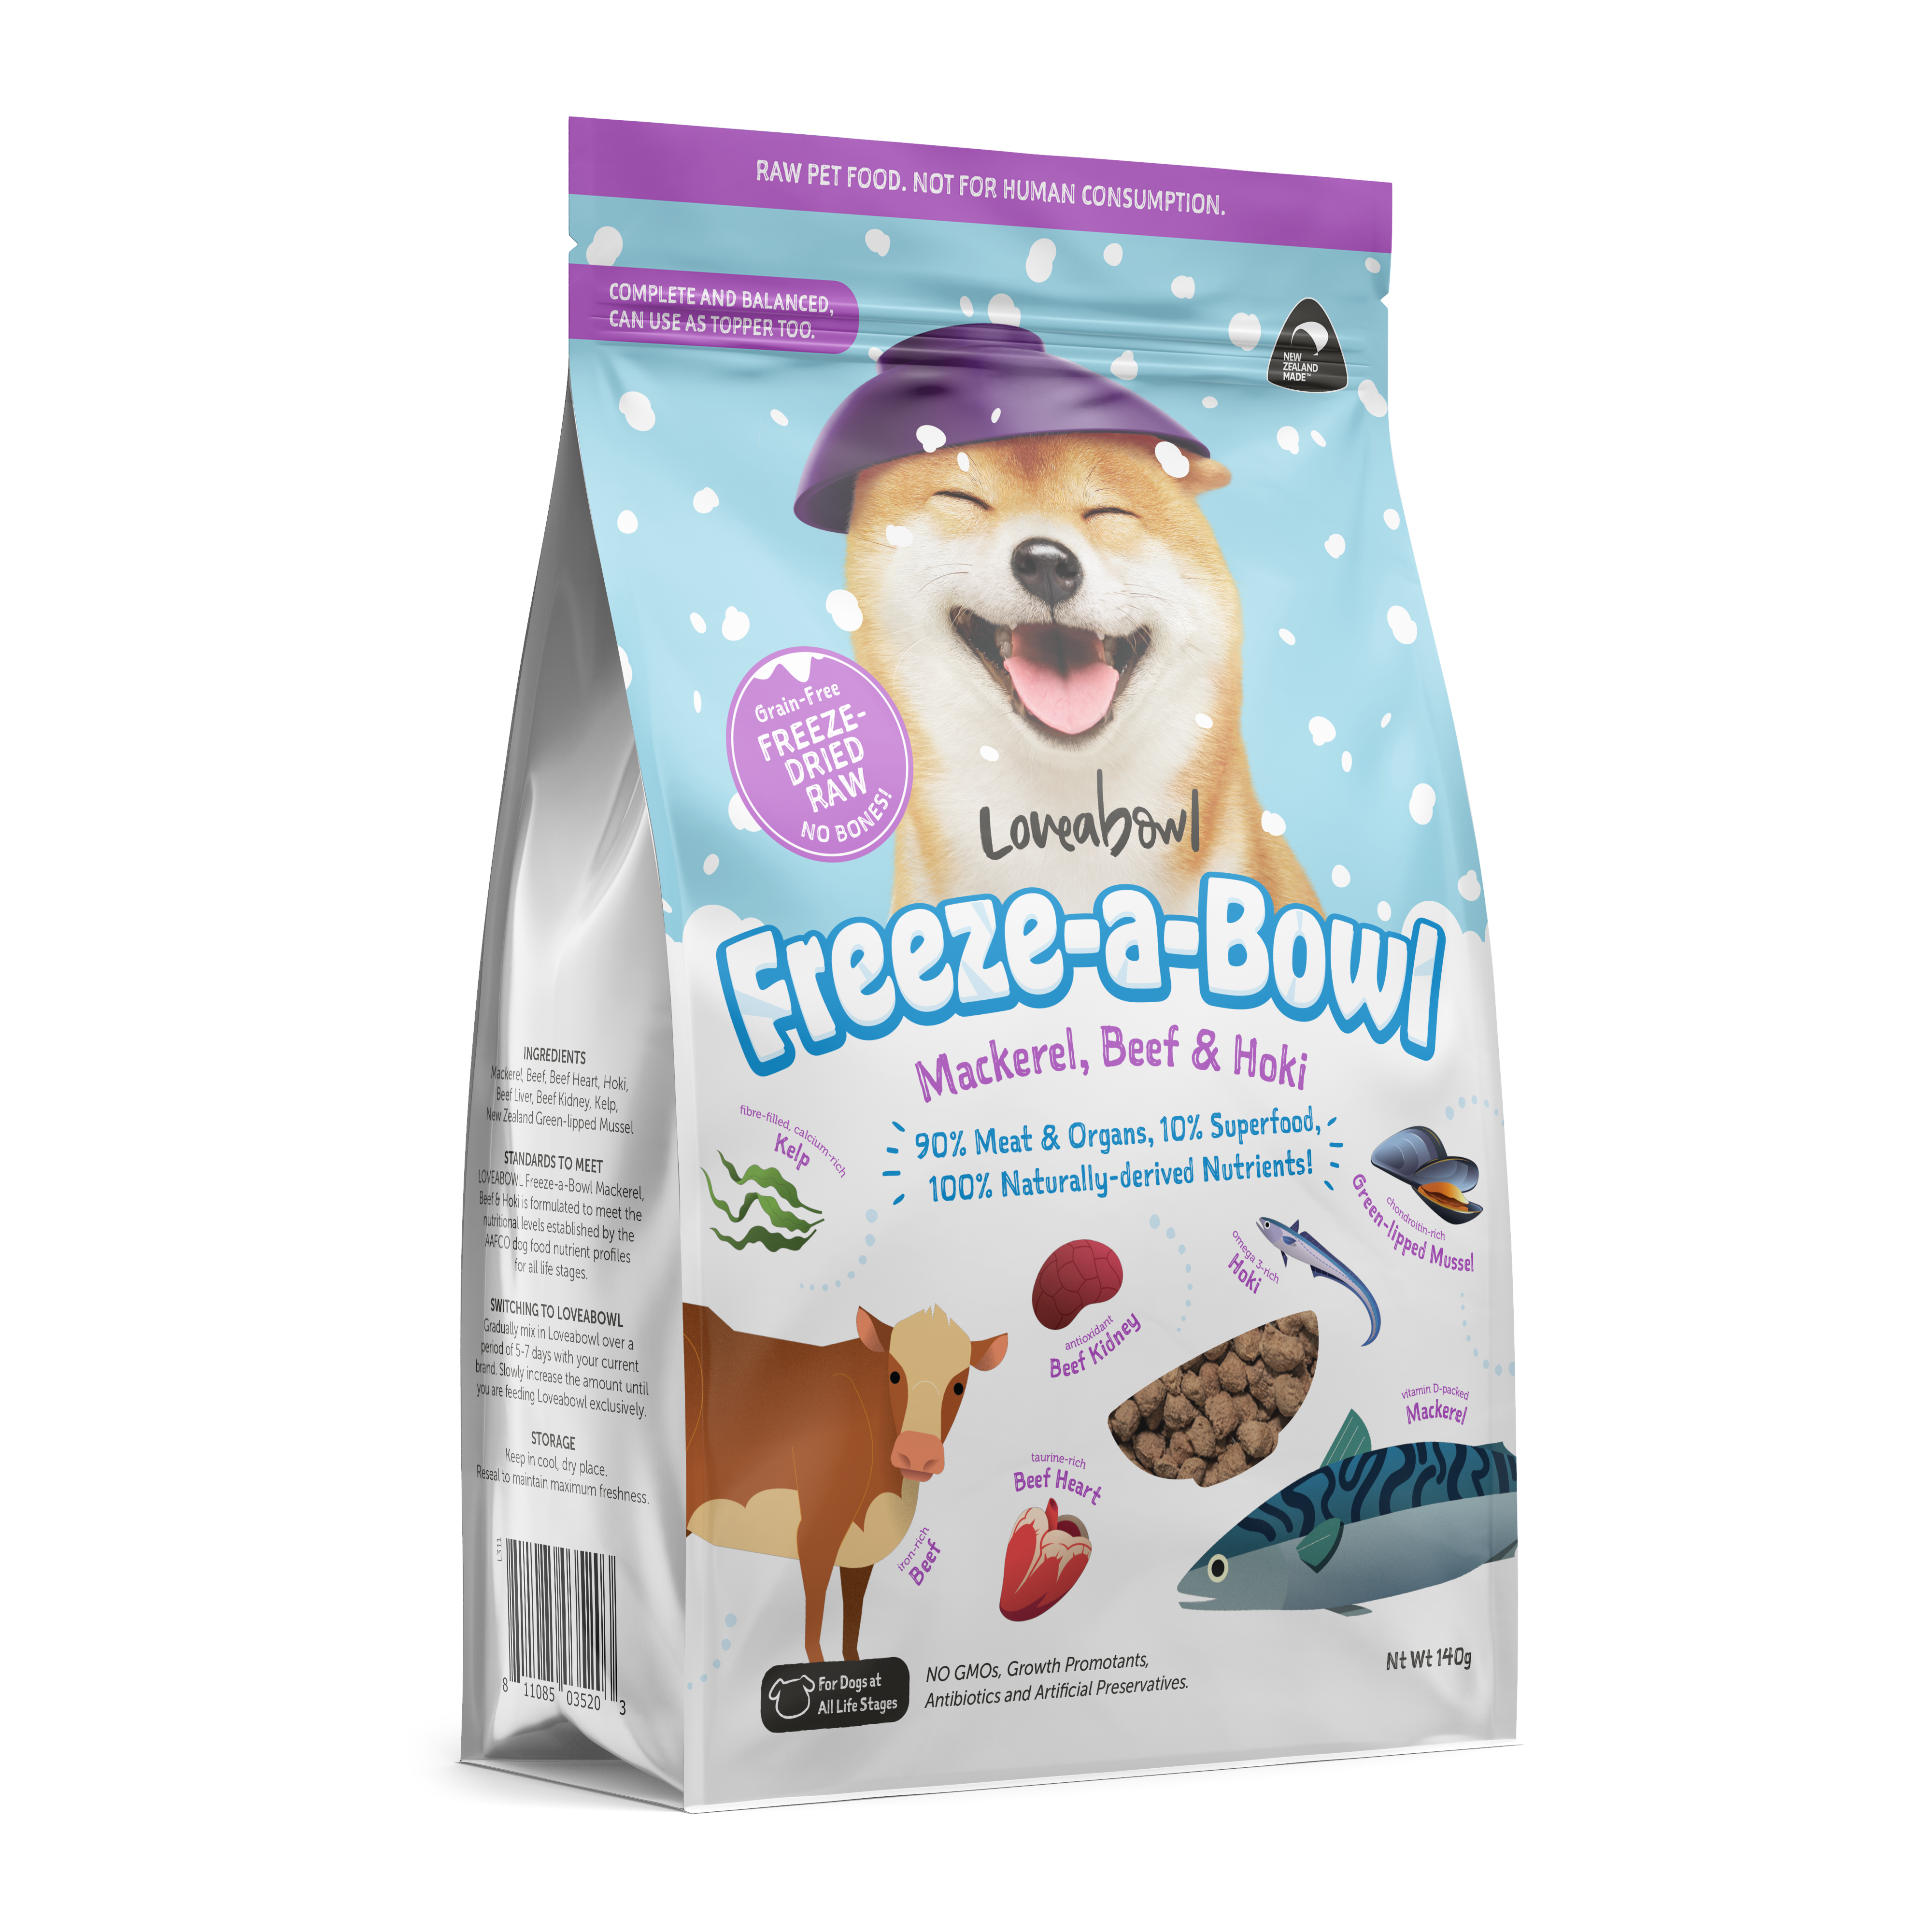 Loveabowl Freeze-a-Bowl Mackerel, Beef & Hoki for Dogs